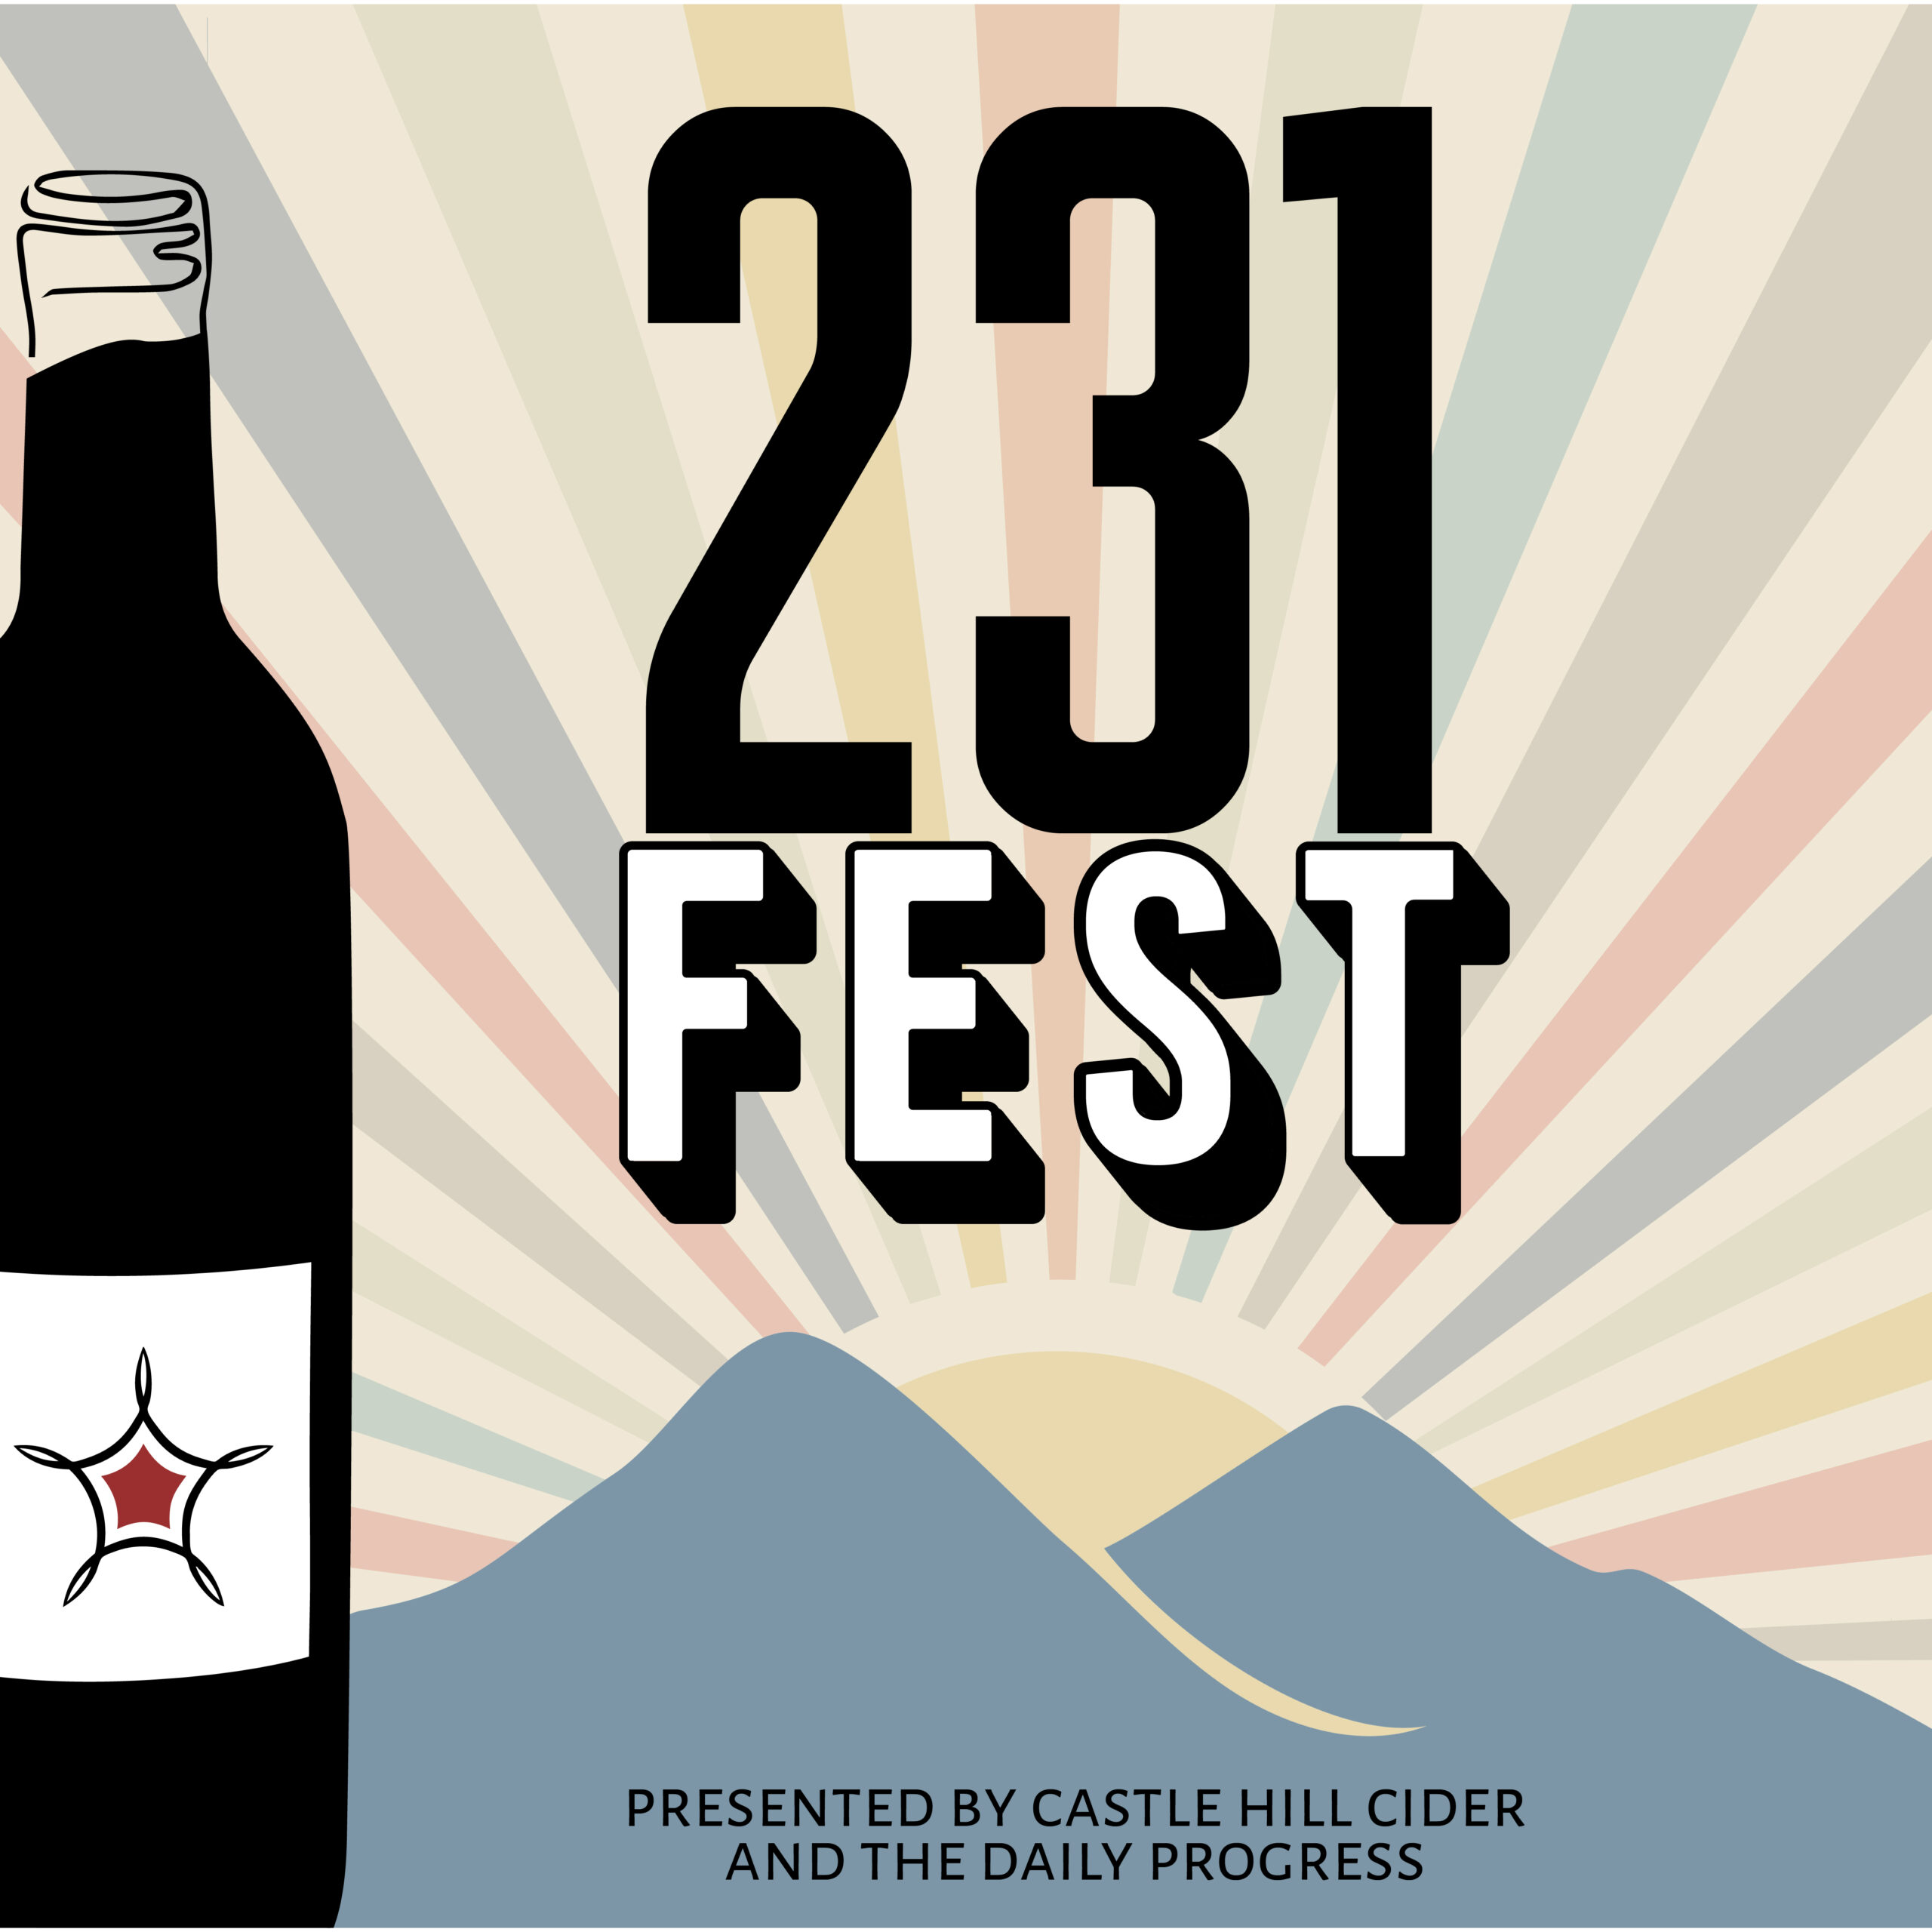 231 Fest Logo and Poster Design